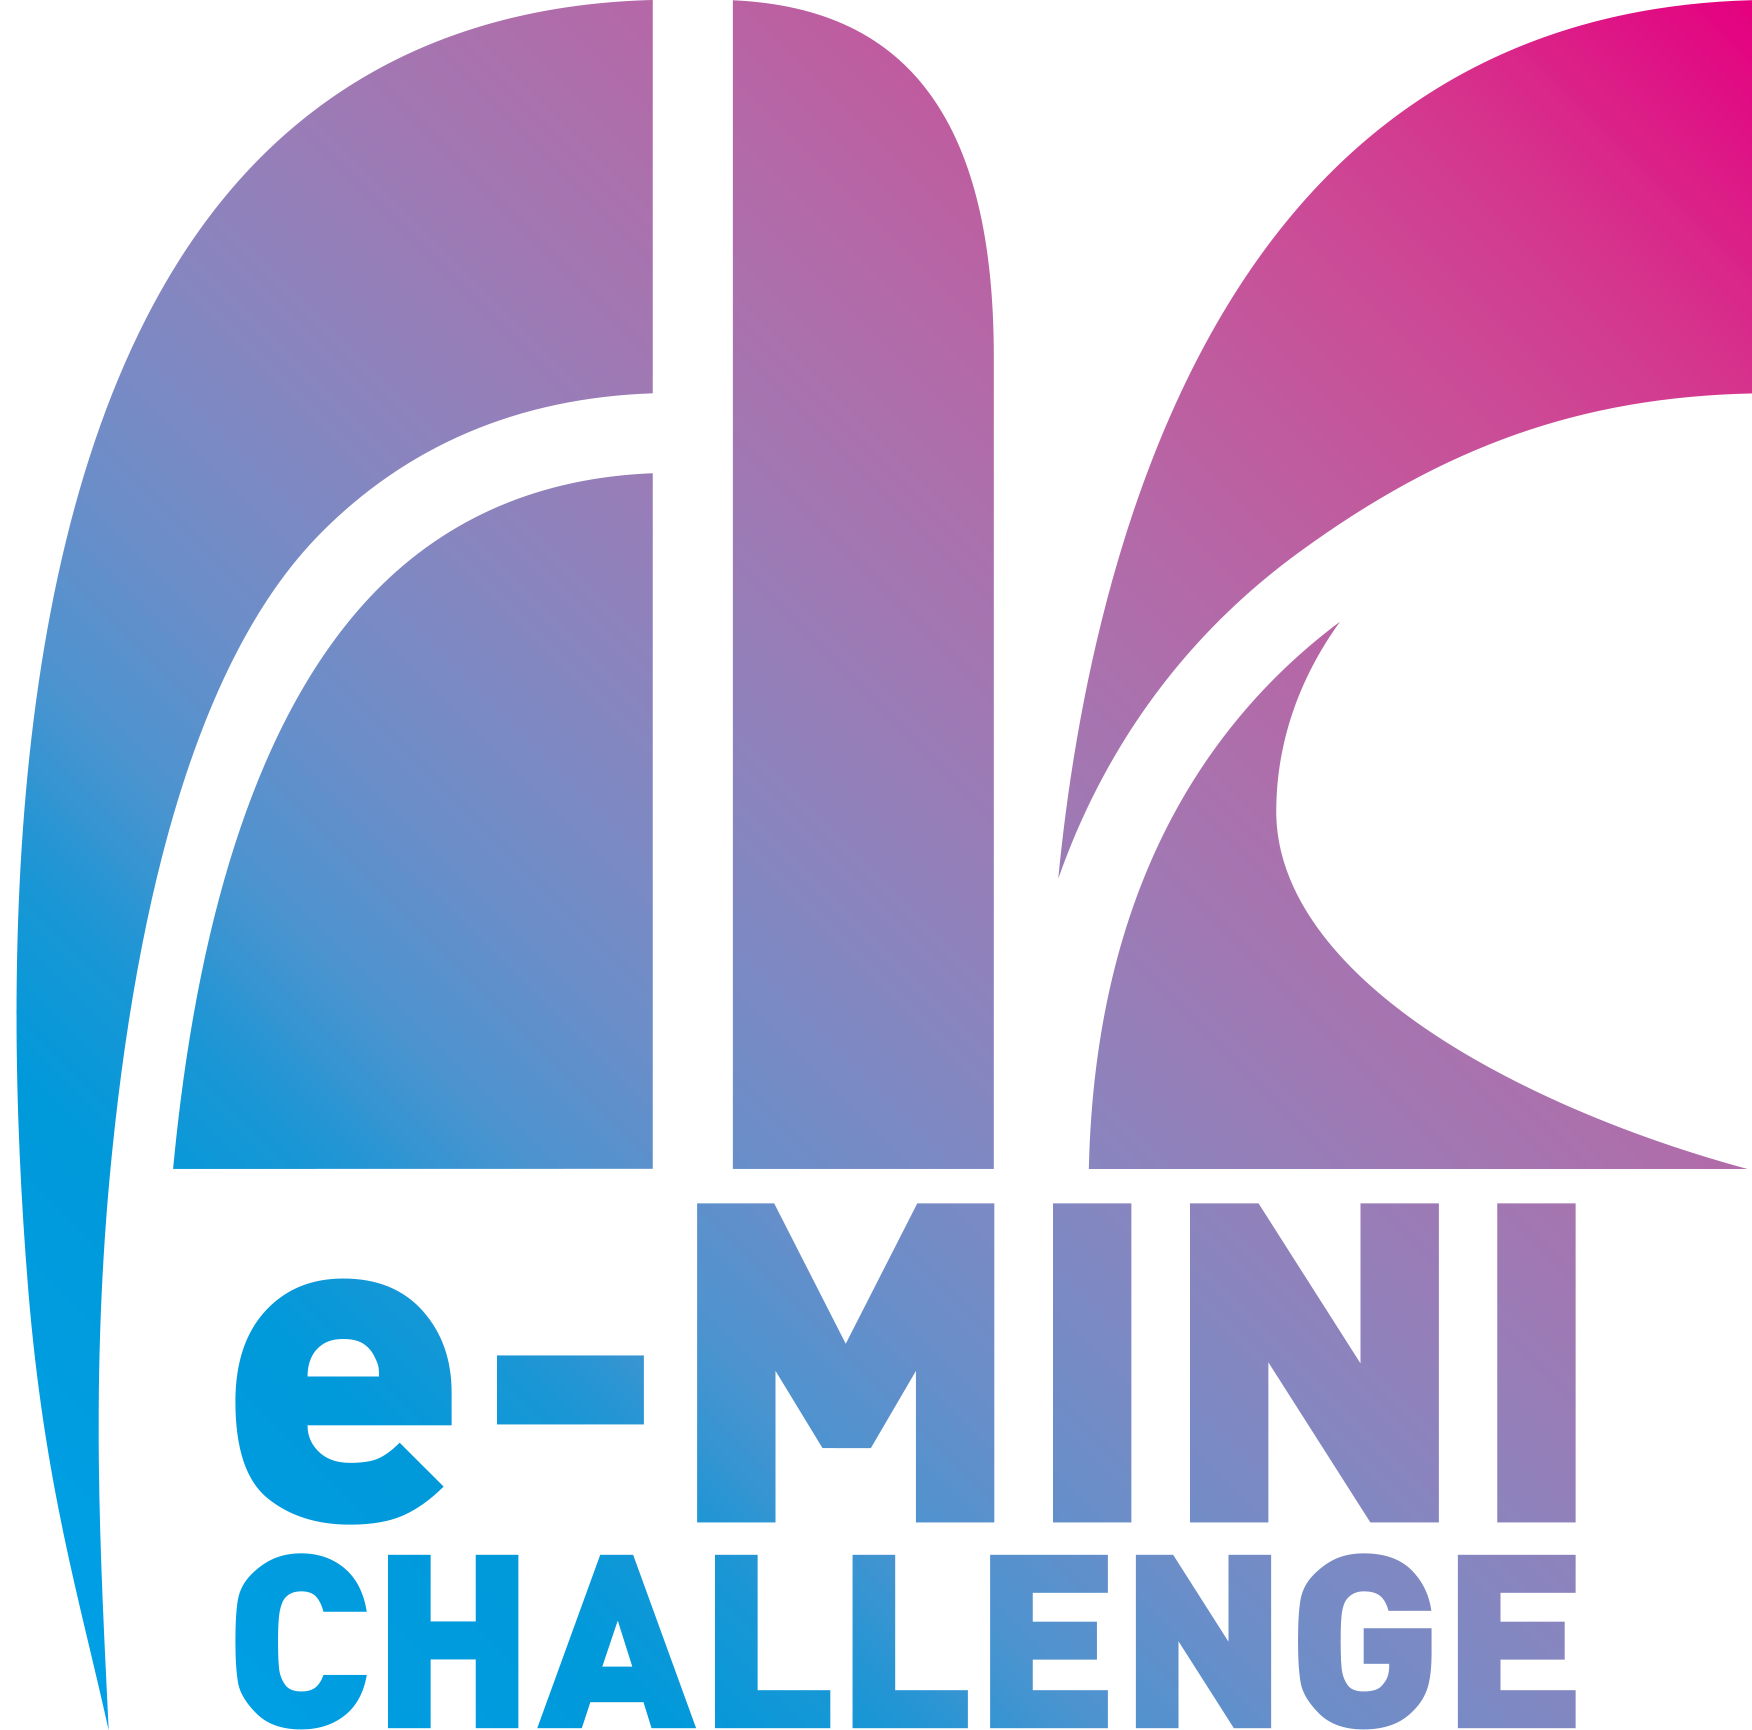 e-MINI CHALLENGE® 2021 S1 Rd.1 A/B ポイントランキング公開